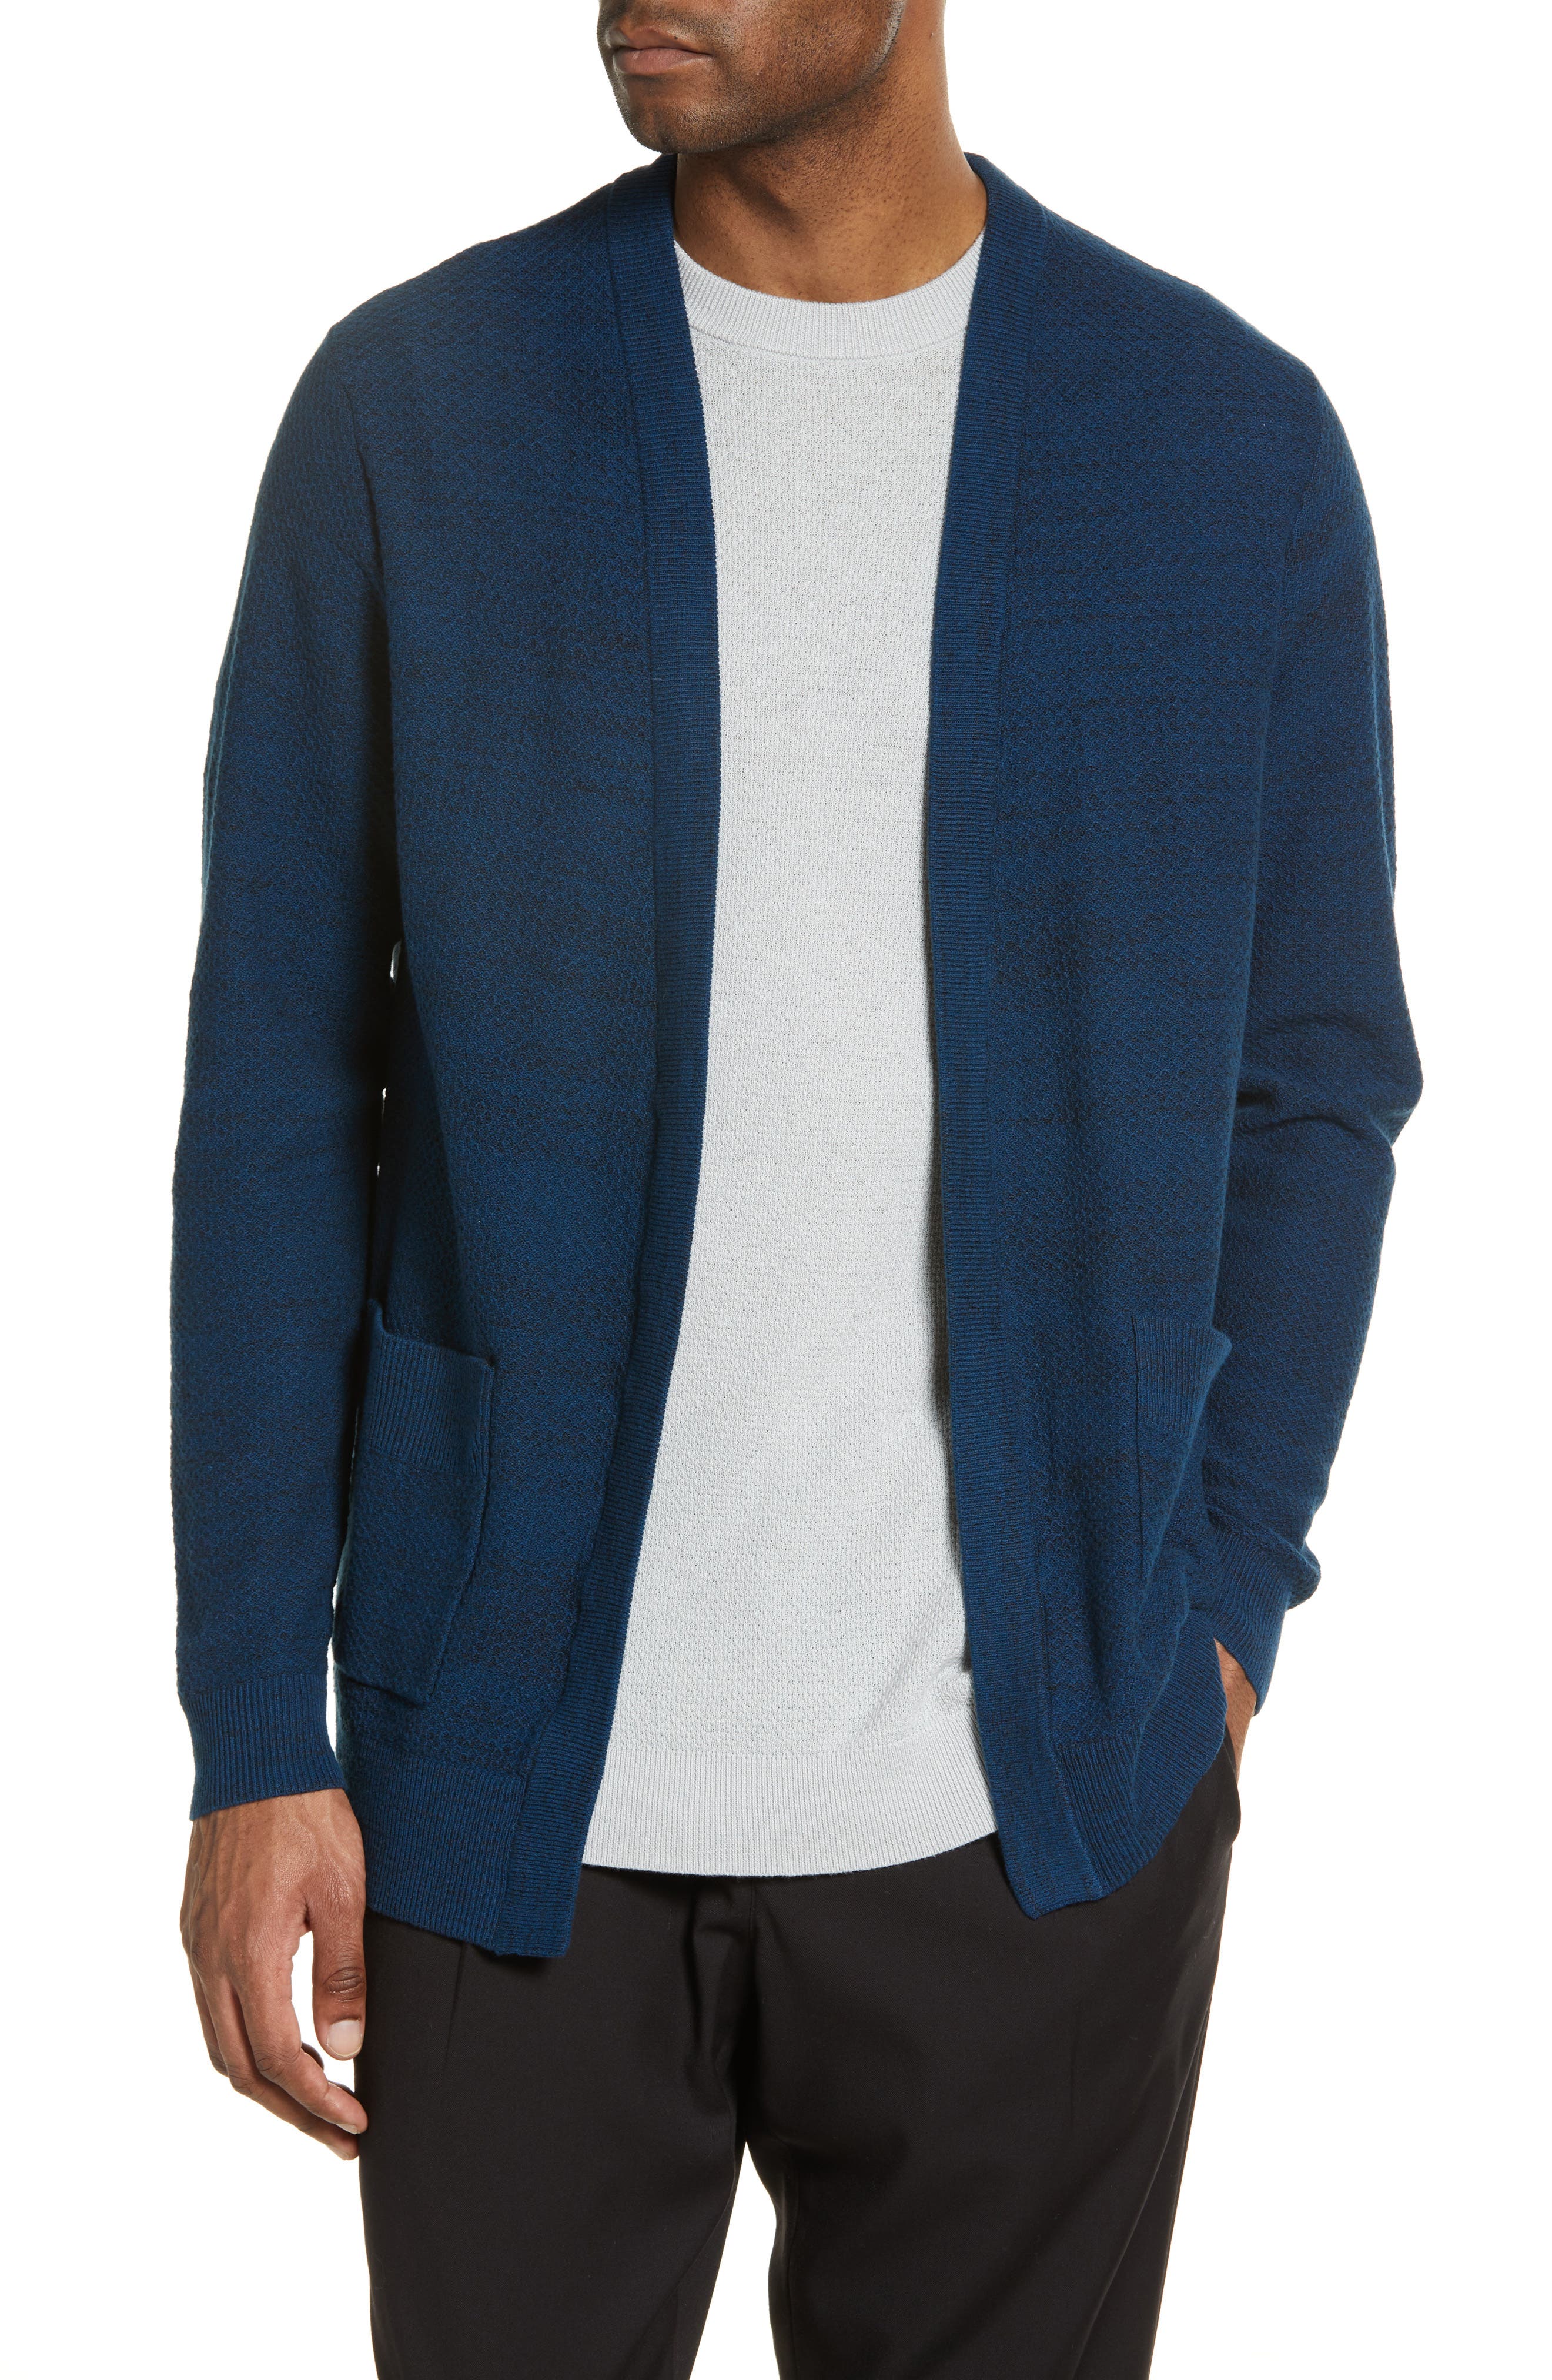 Men's merino wool jacket/cardigan/bleizer/coat-cardigan/sweater Clothing Gender-Neutral Adult Clothing Jumpers 